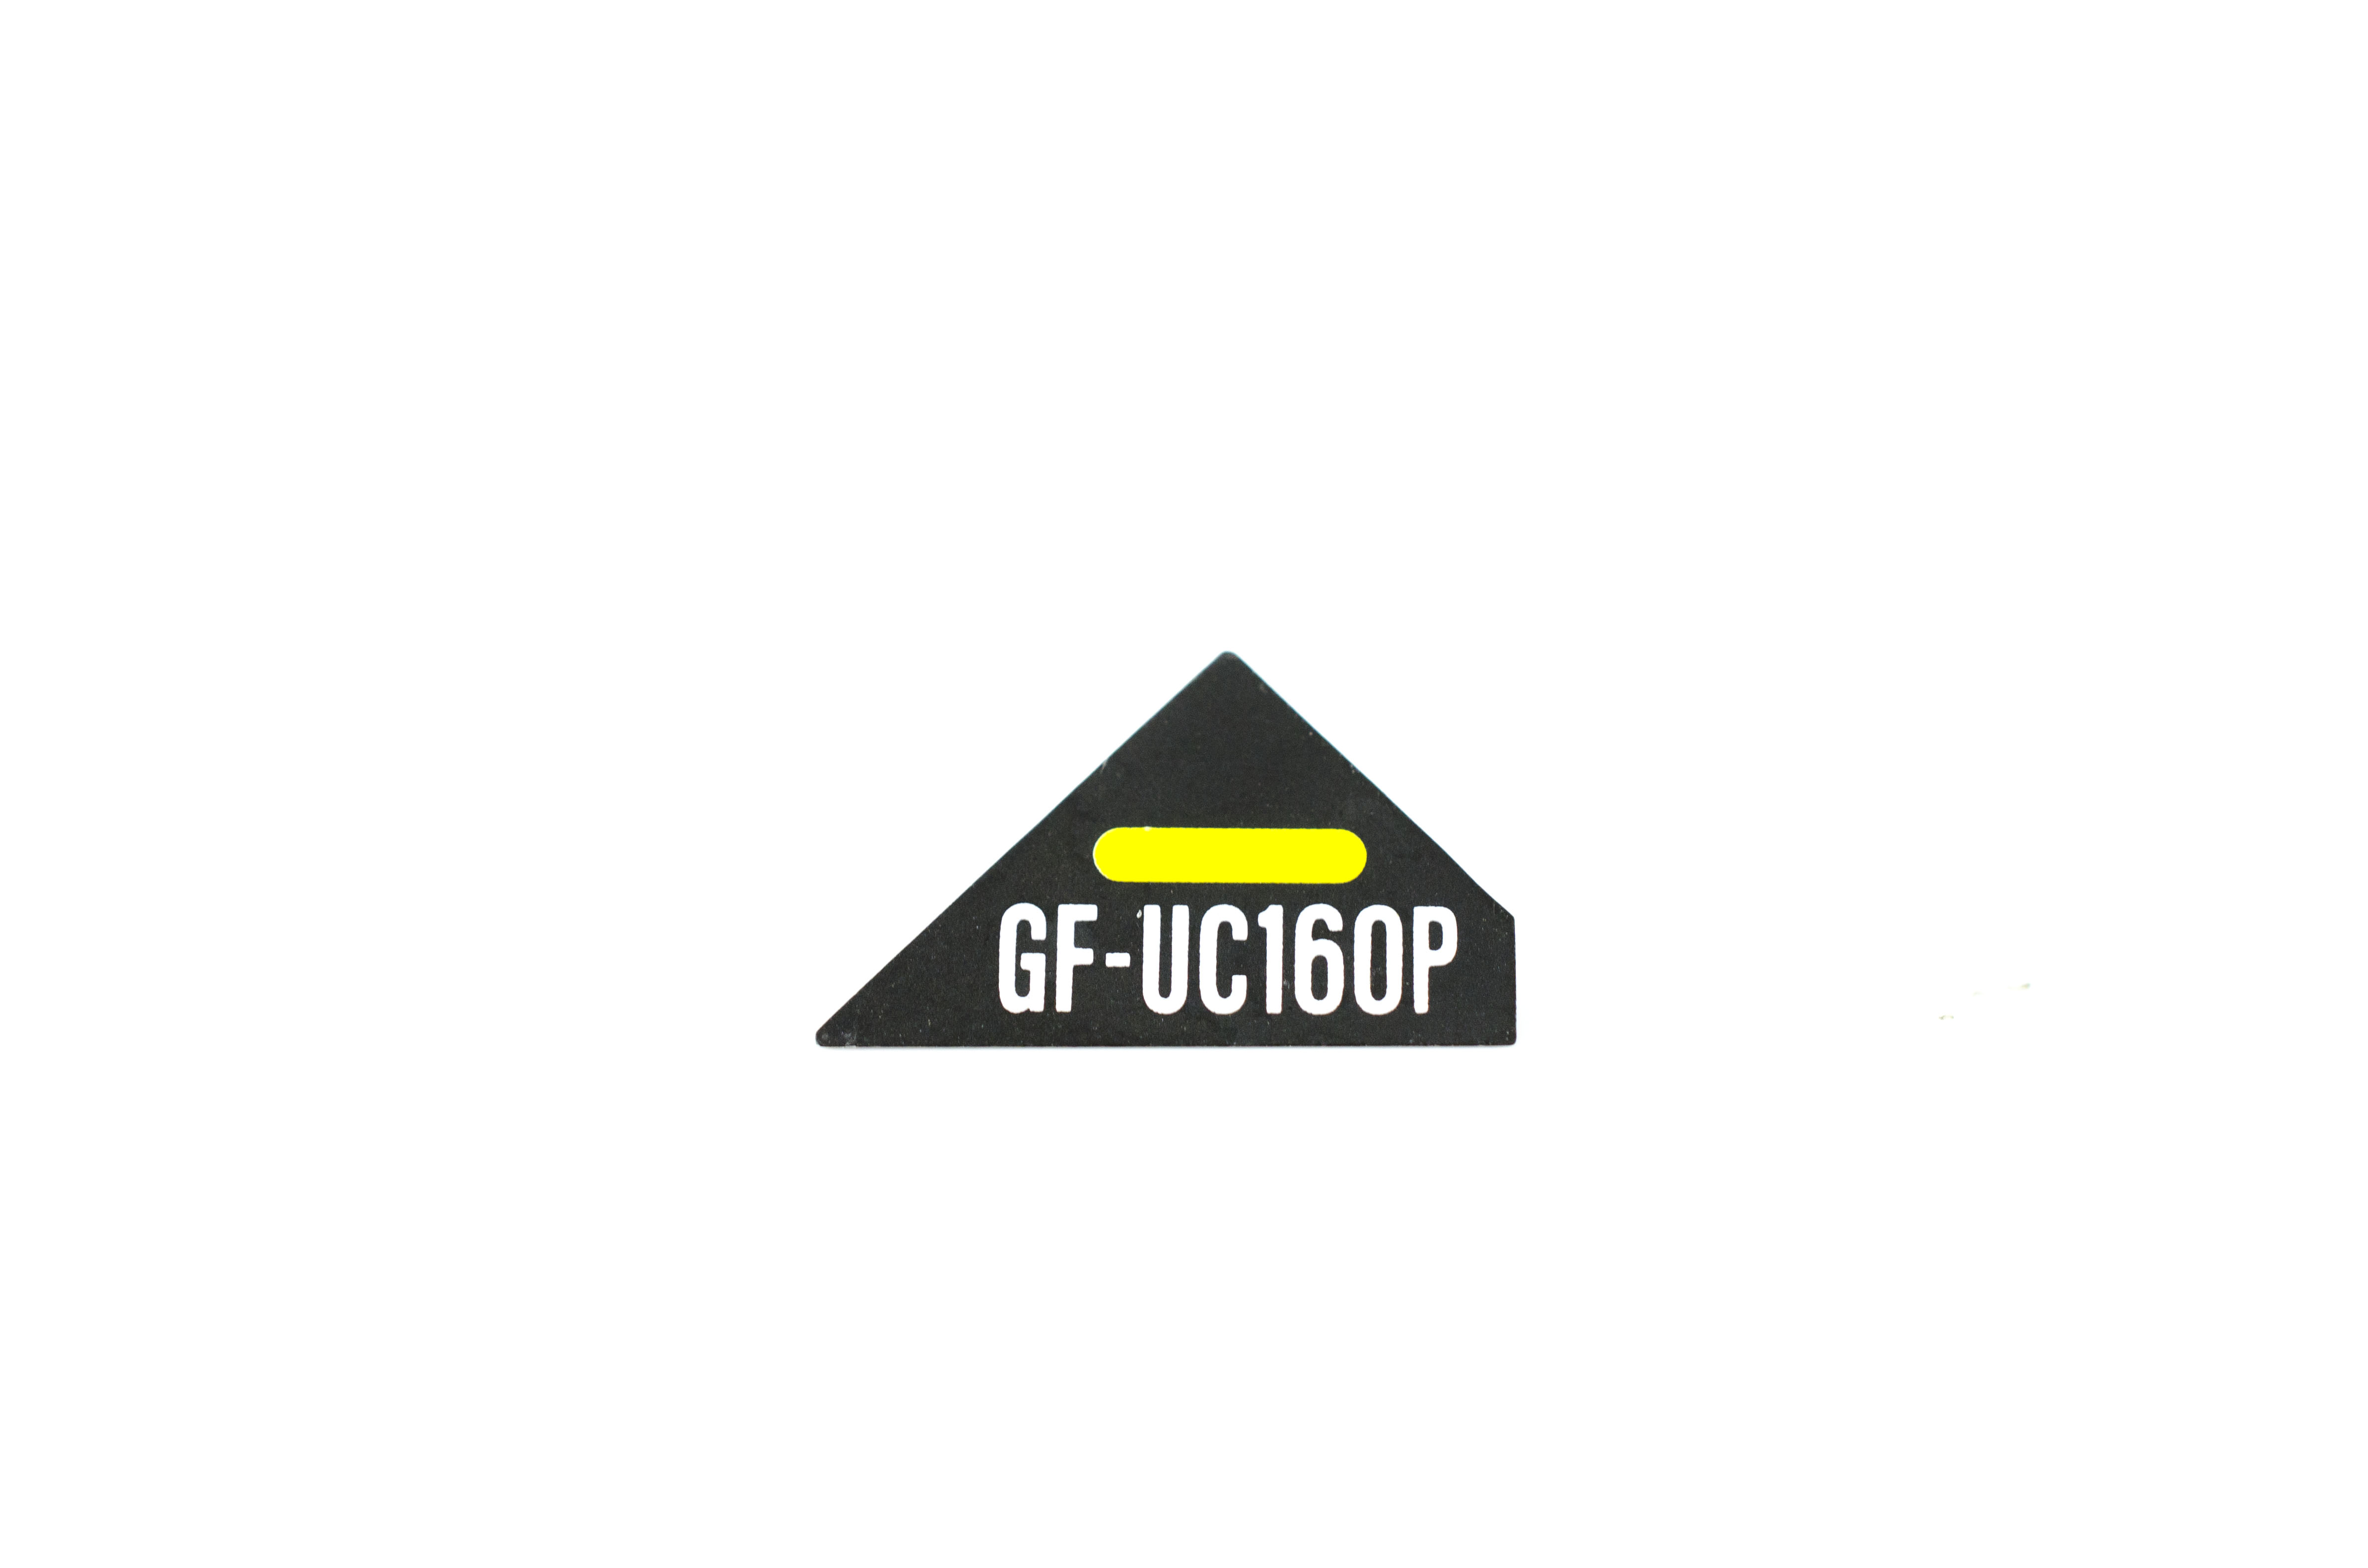 OEM Nameplate: Control Grip - GF-UC160P